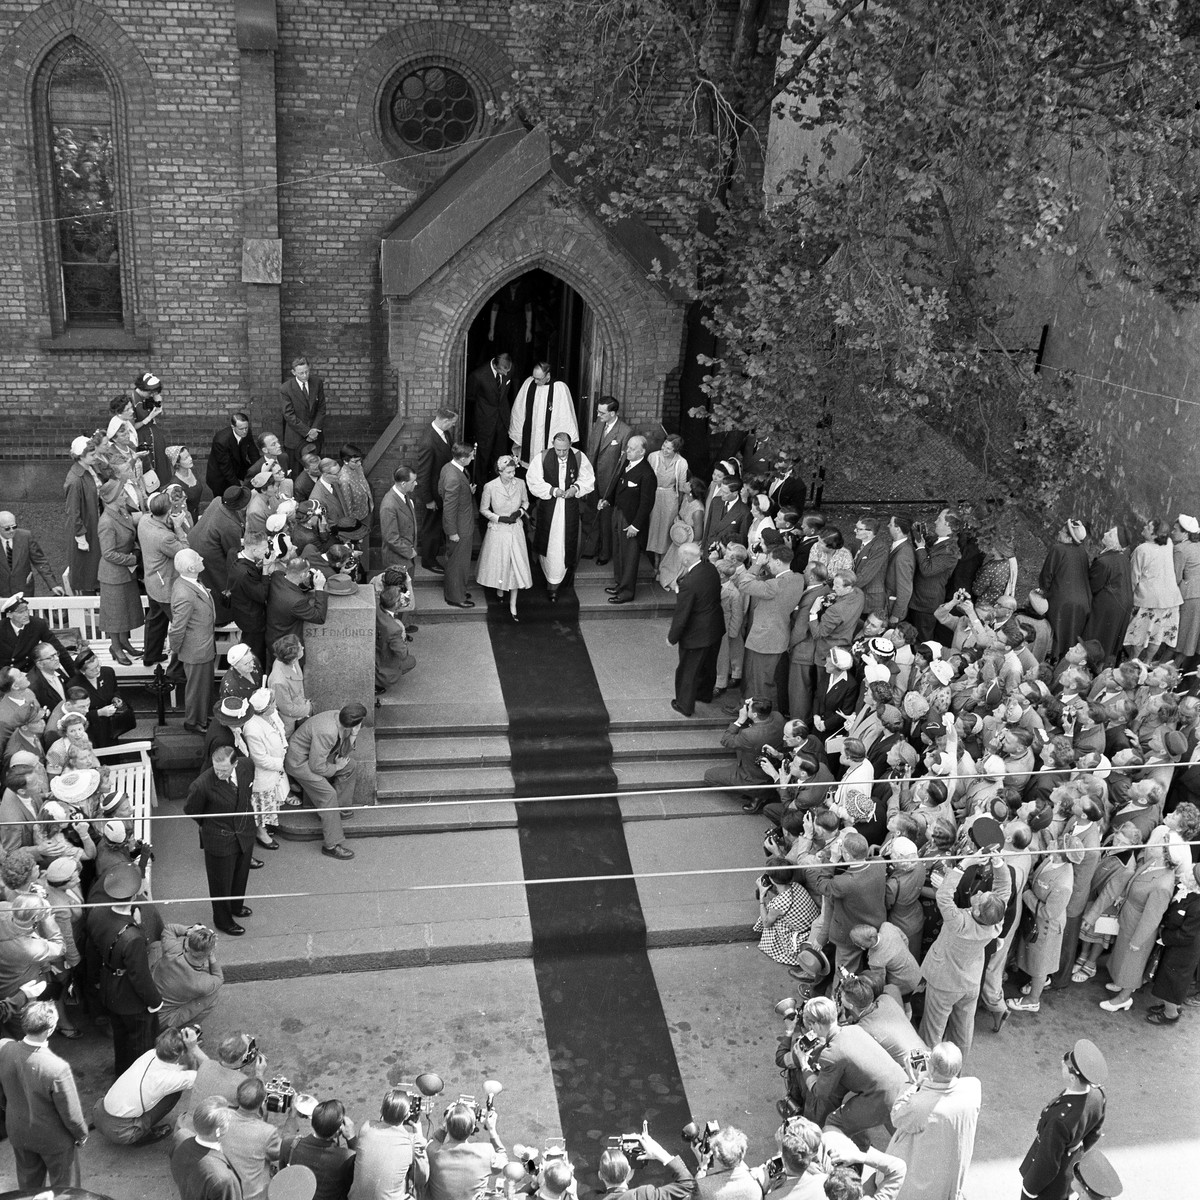 Dronning Elizabeth II kommer på statsbesøk til Norge. Her forlater Dronningen og Prins Philip St. Edmunds Church i Møllergata 30 i Oslo etter en gudstjeneste og tar farvel med biskop og pastor i kirken.